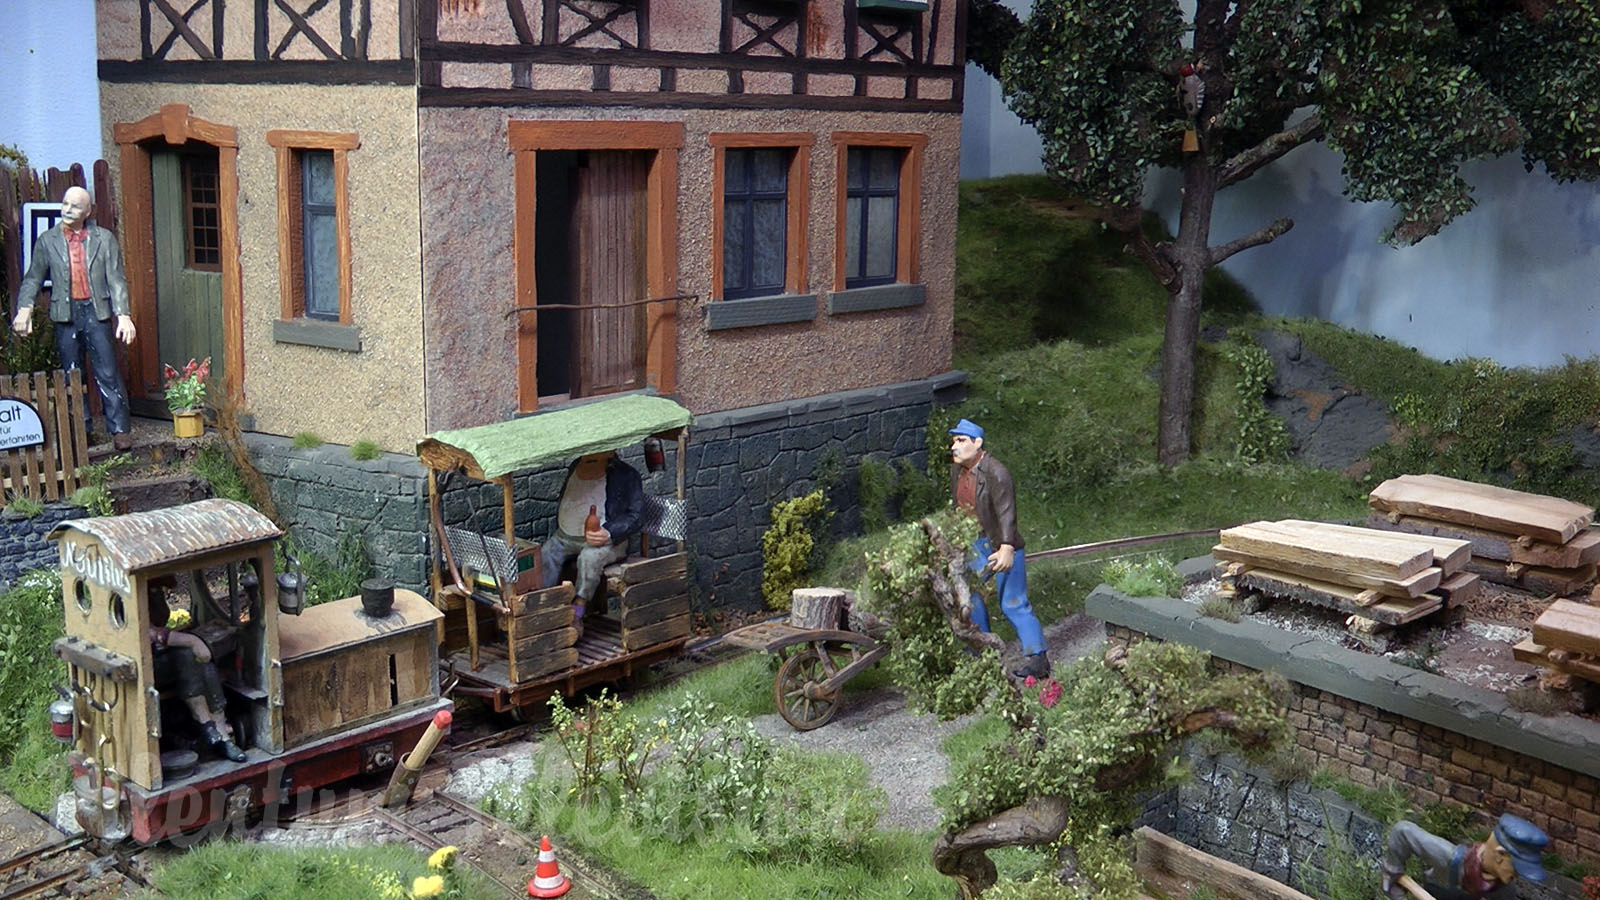 Very nice Gn15 model train layout of field railways - 1/35 diorama of trench railways